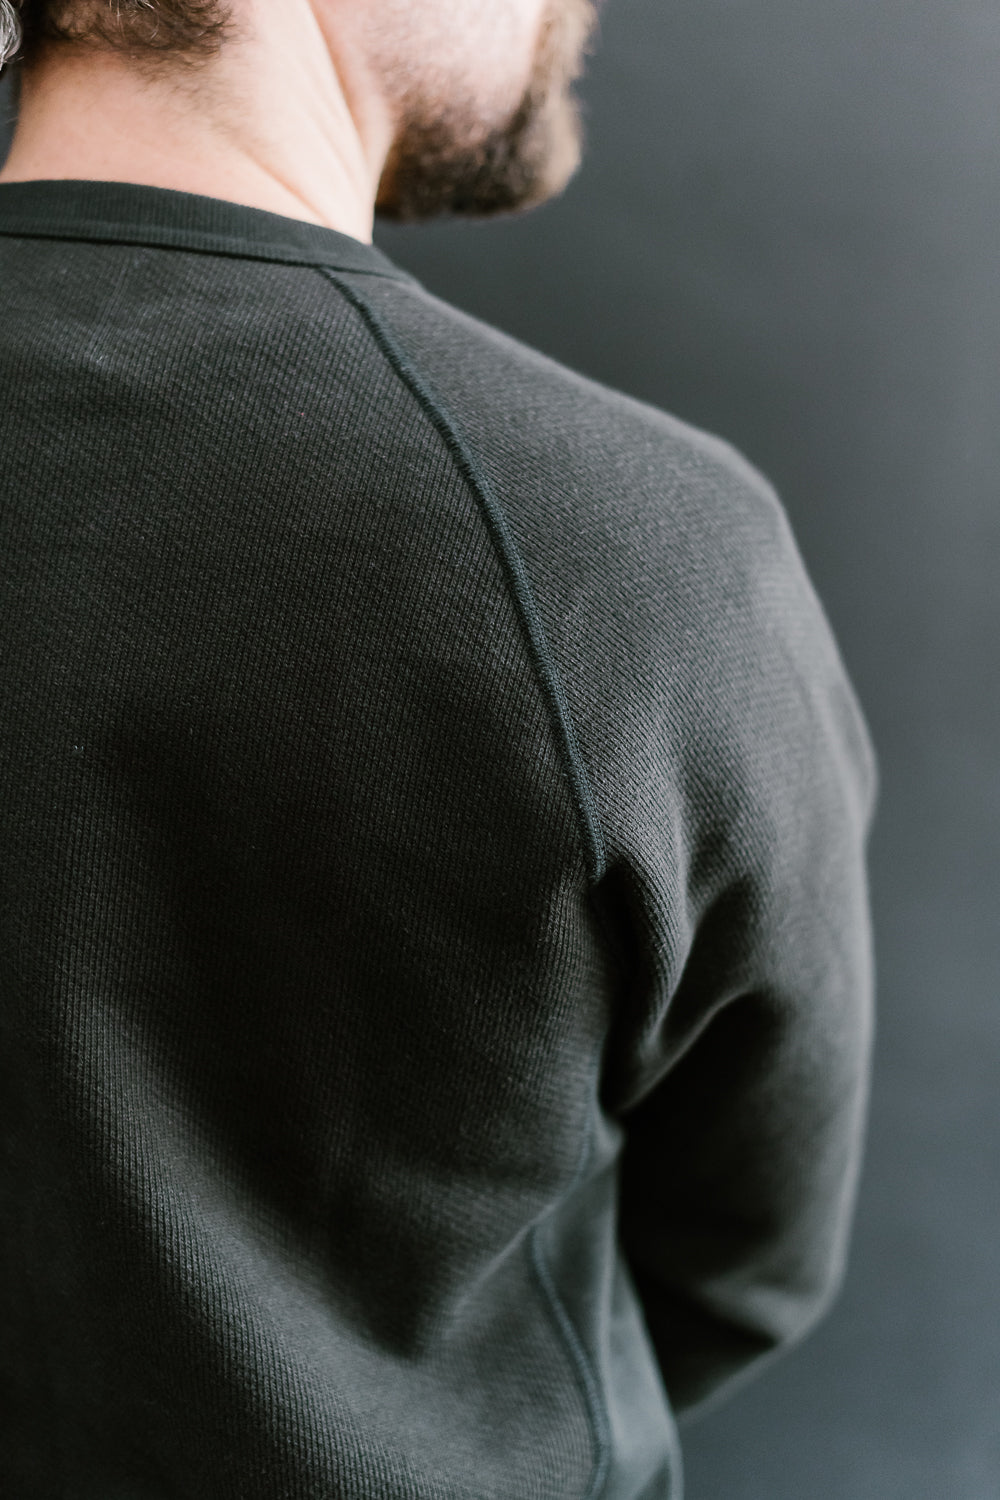 French Terry Crewneck Sweatshirt, Vintage Grey – SAULT New England